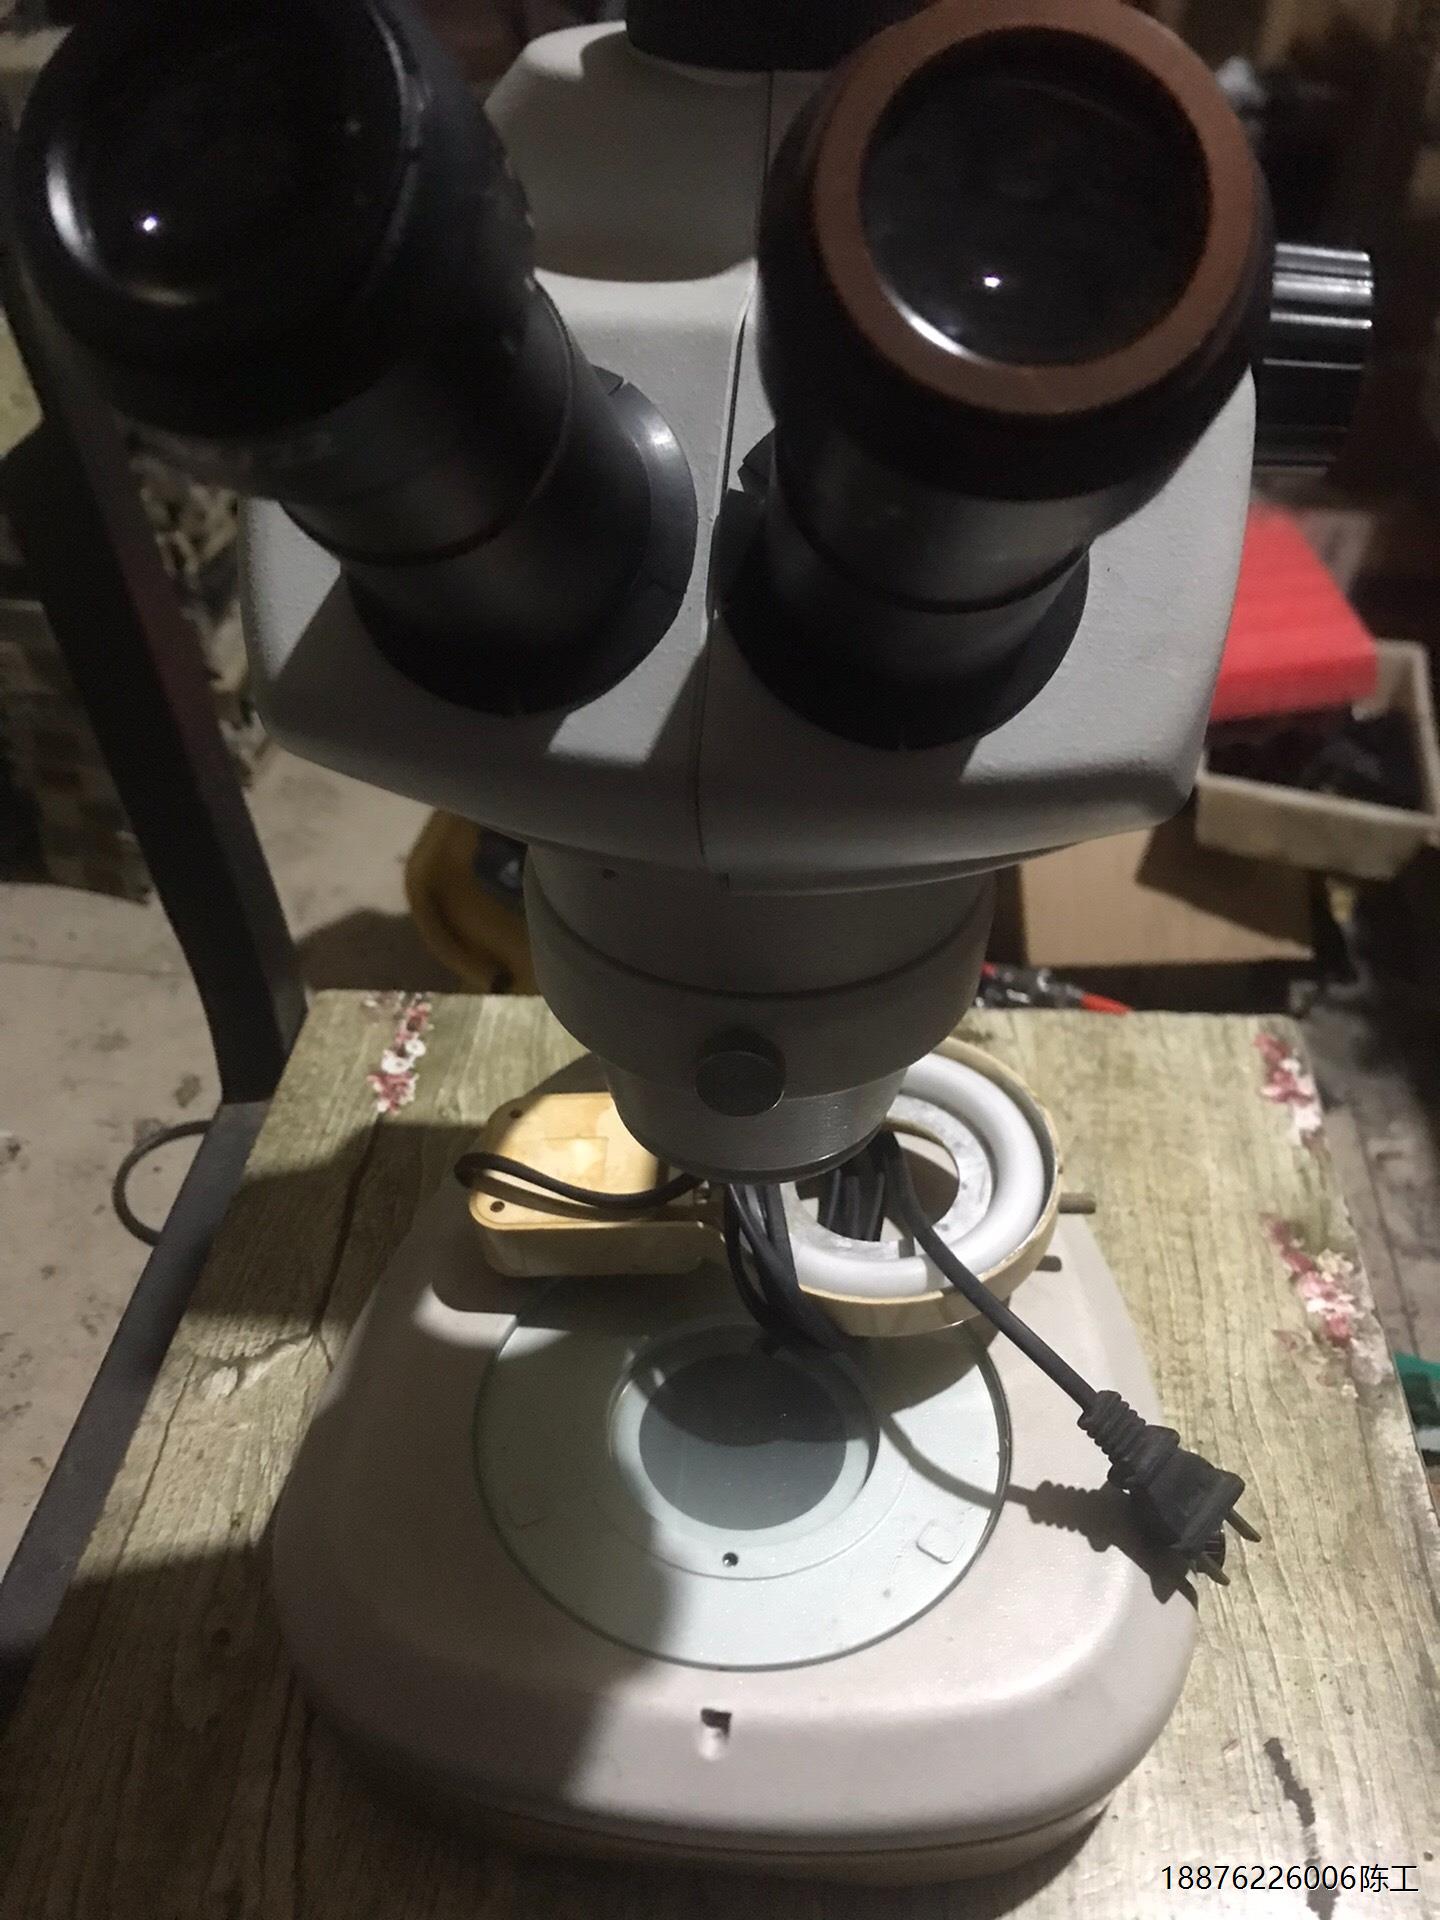 ZOOM646S江南禹成三目显微镜，上下灯都是好的，下灯可以